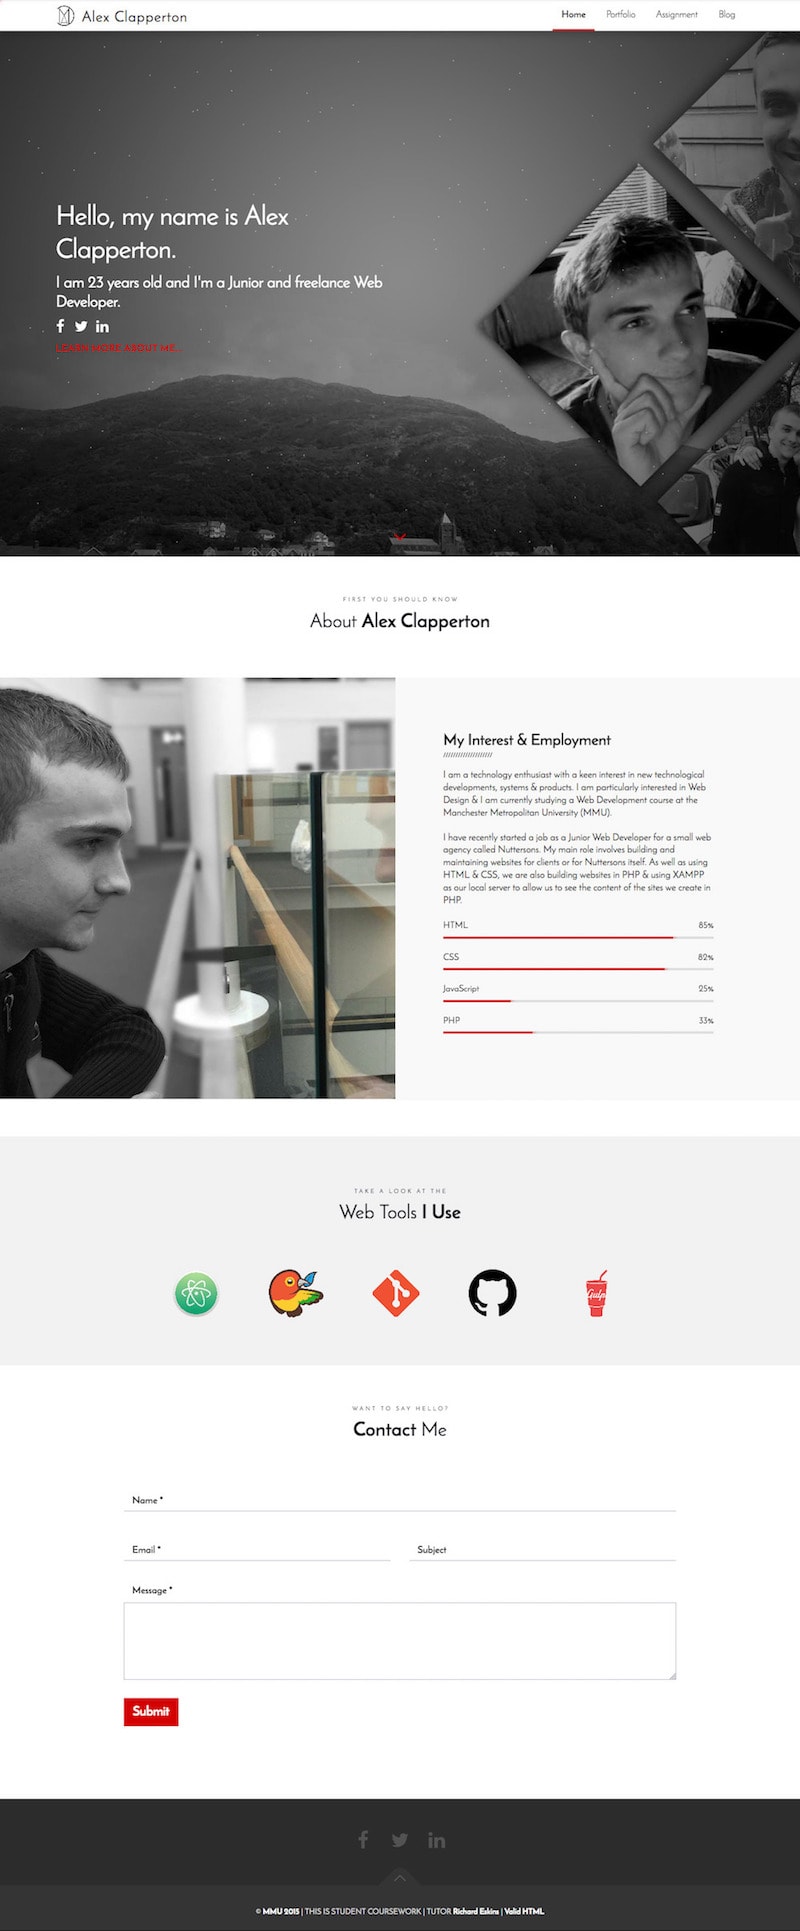 Desktop screenshot of Alex's website portfolio made in 2015.